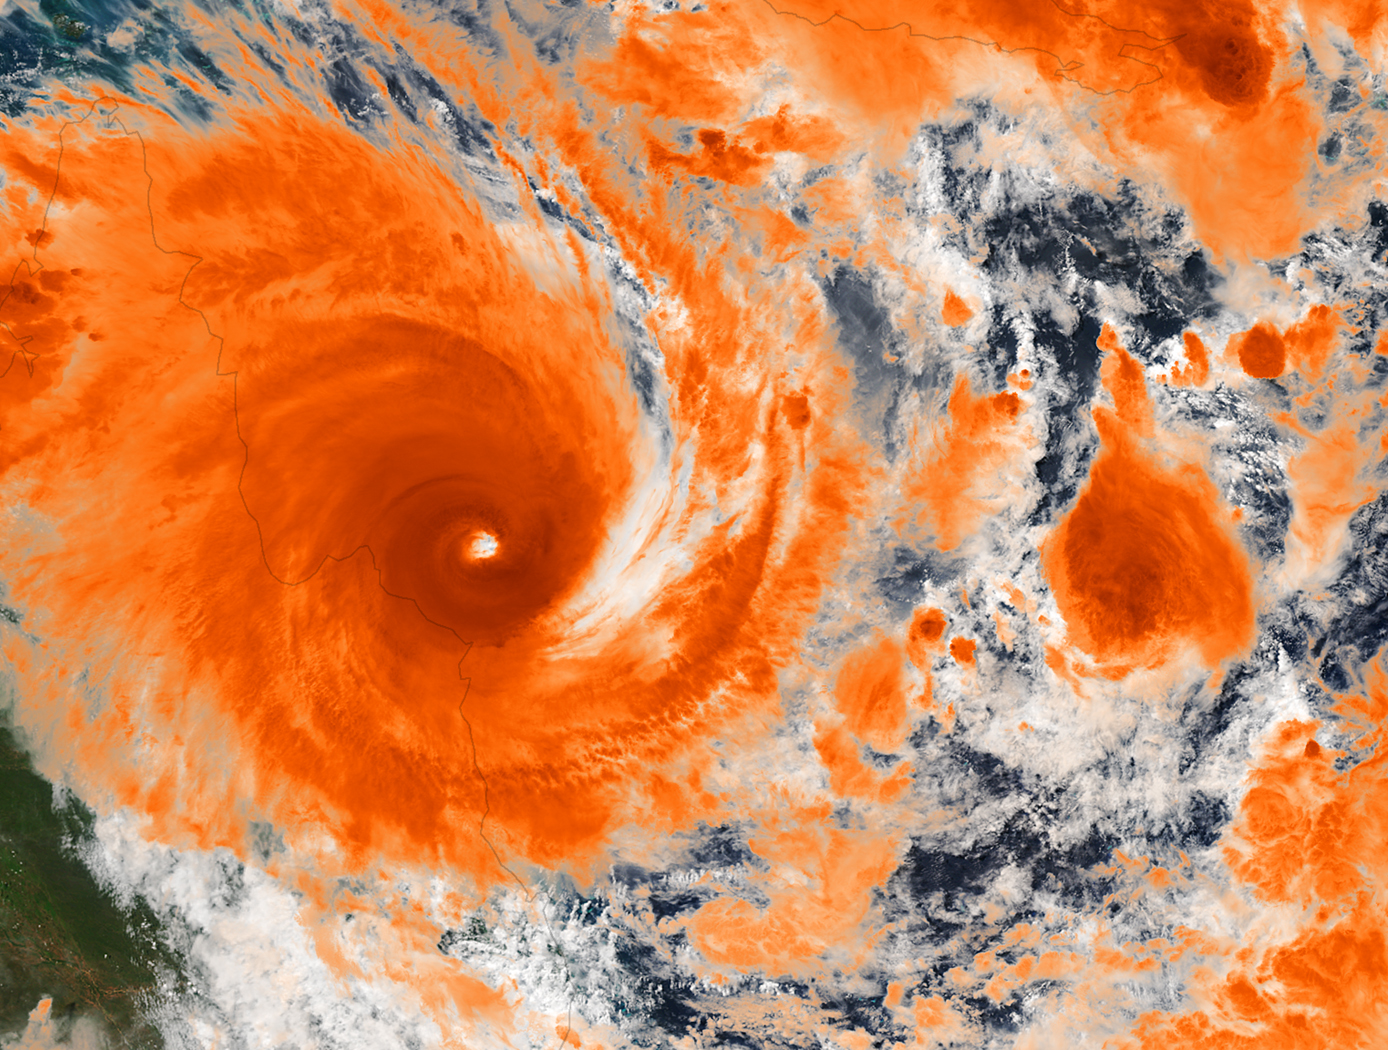 Tropical Cyclone Ita Off-Shore Queensland, Australia; Credit: NASA/NOAA via NOAA Environmental Visualization Laboratory